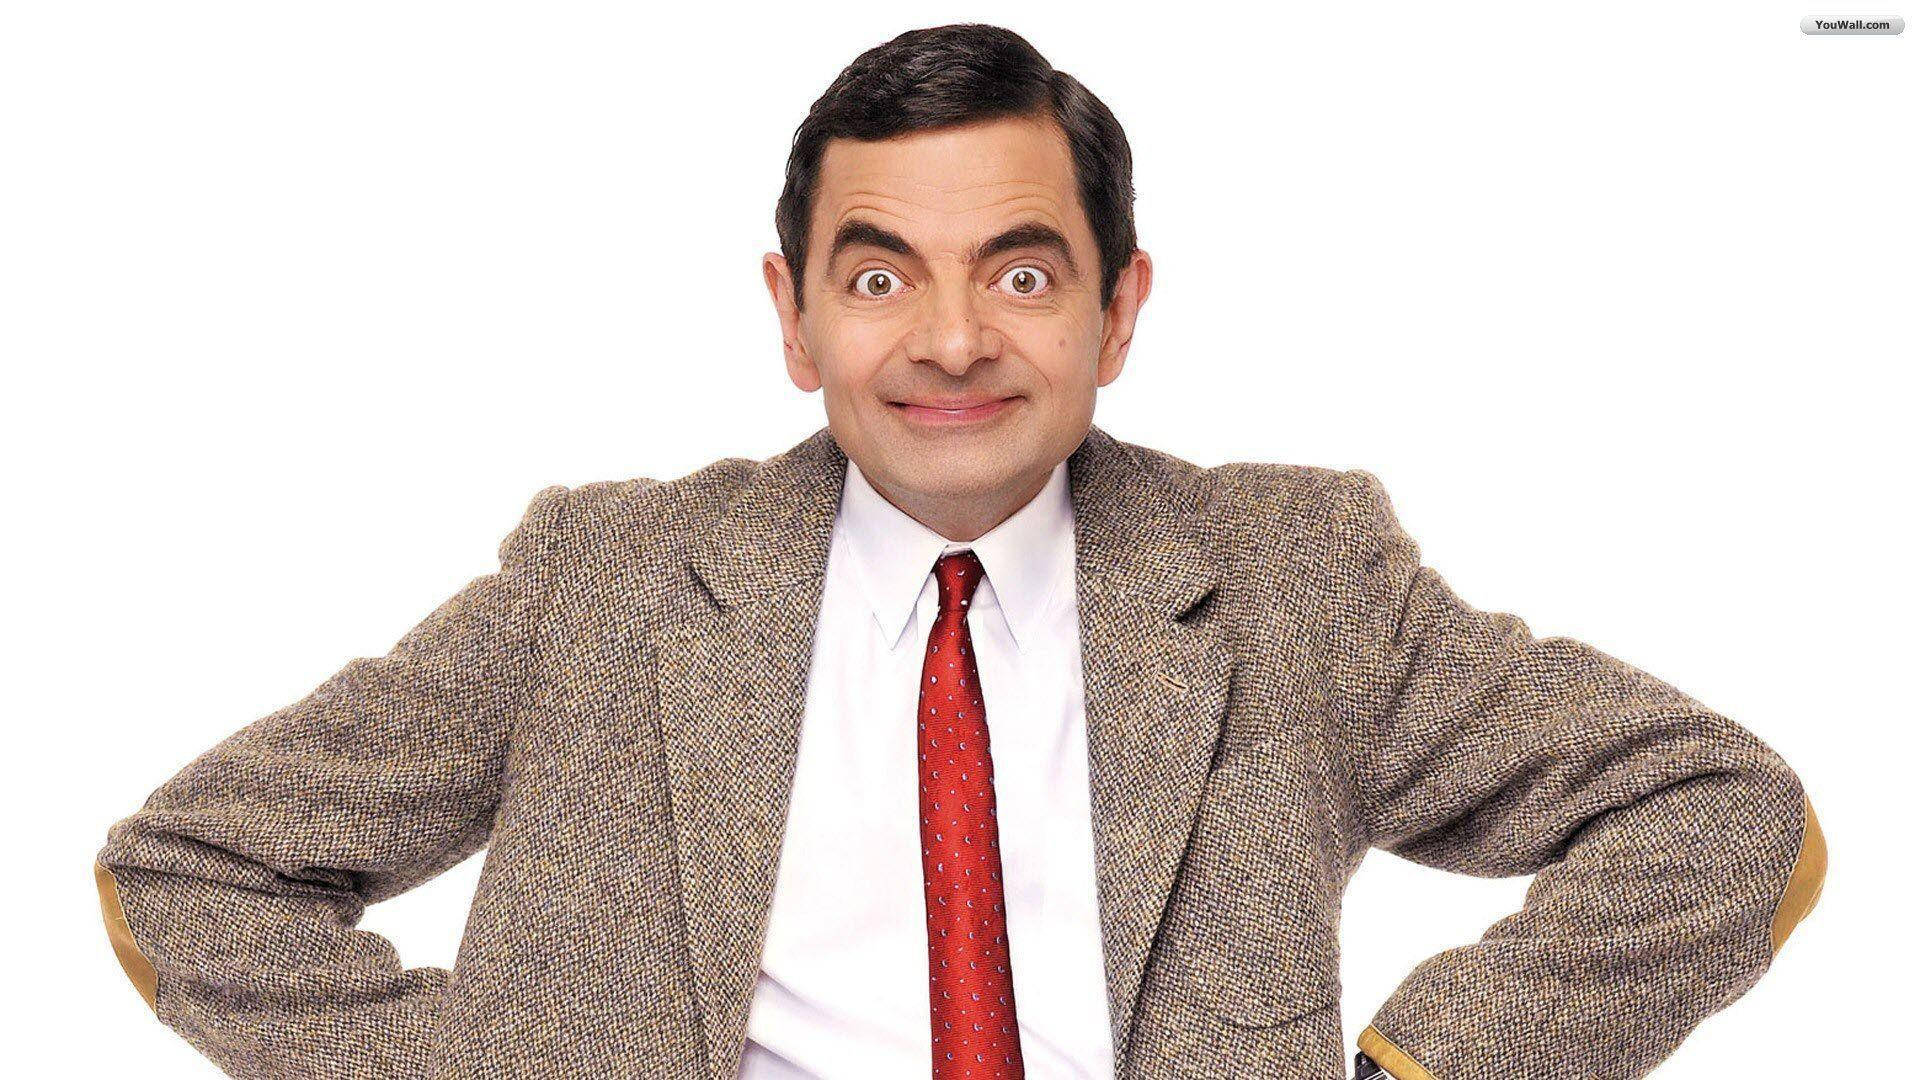 Mr. Bean Hip Pose